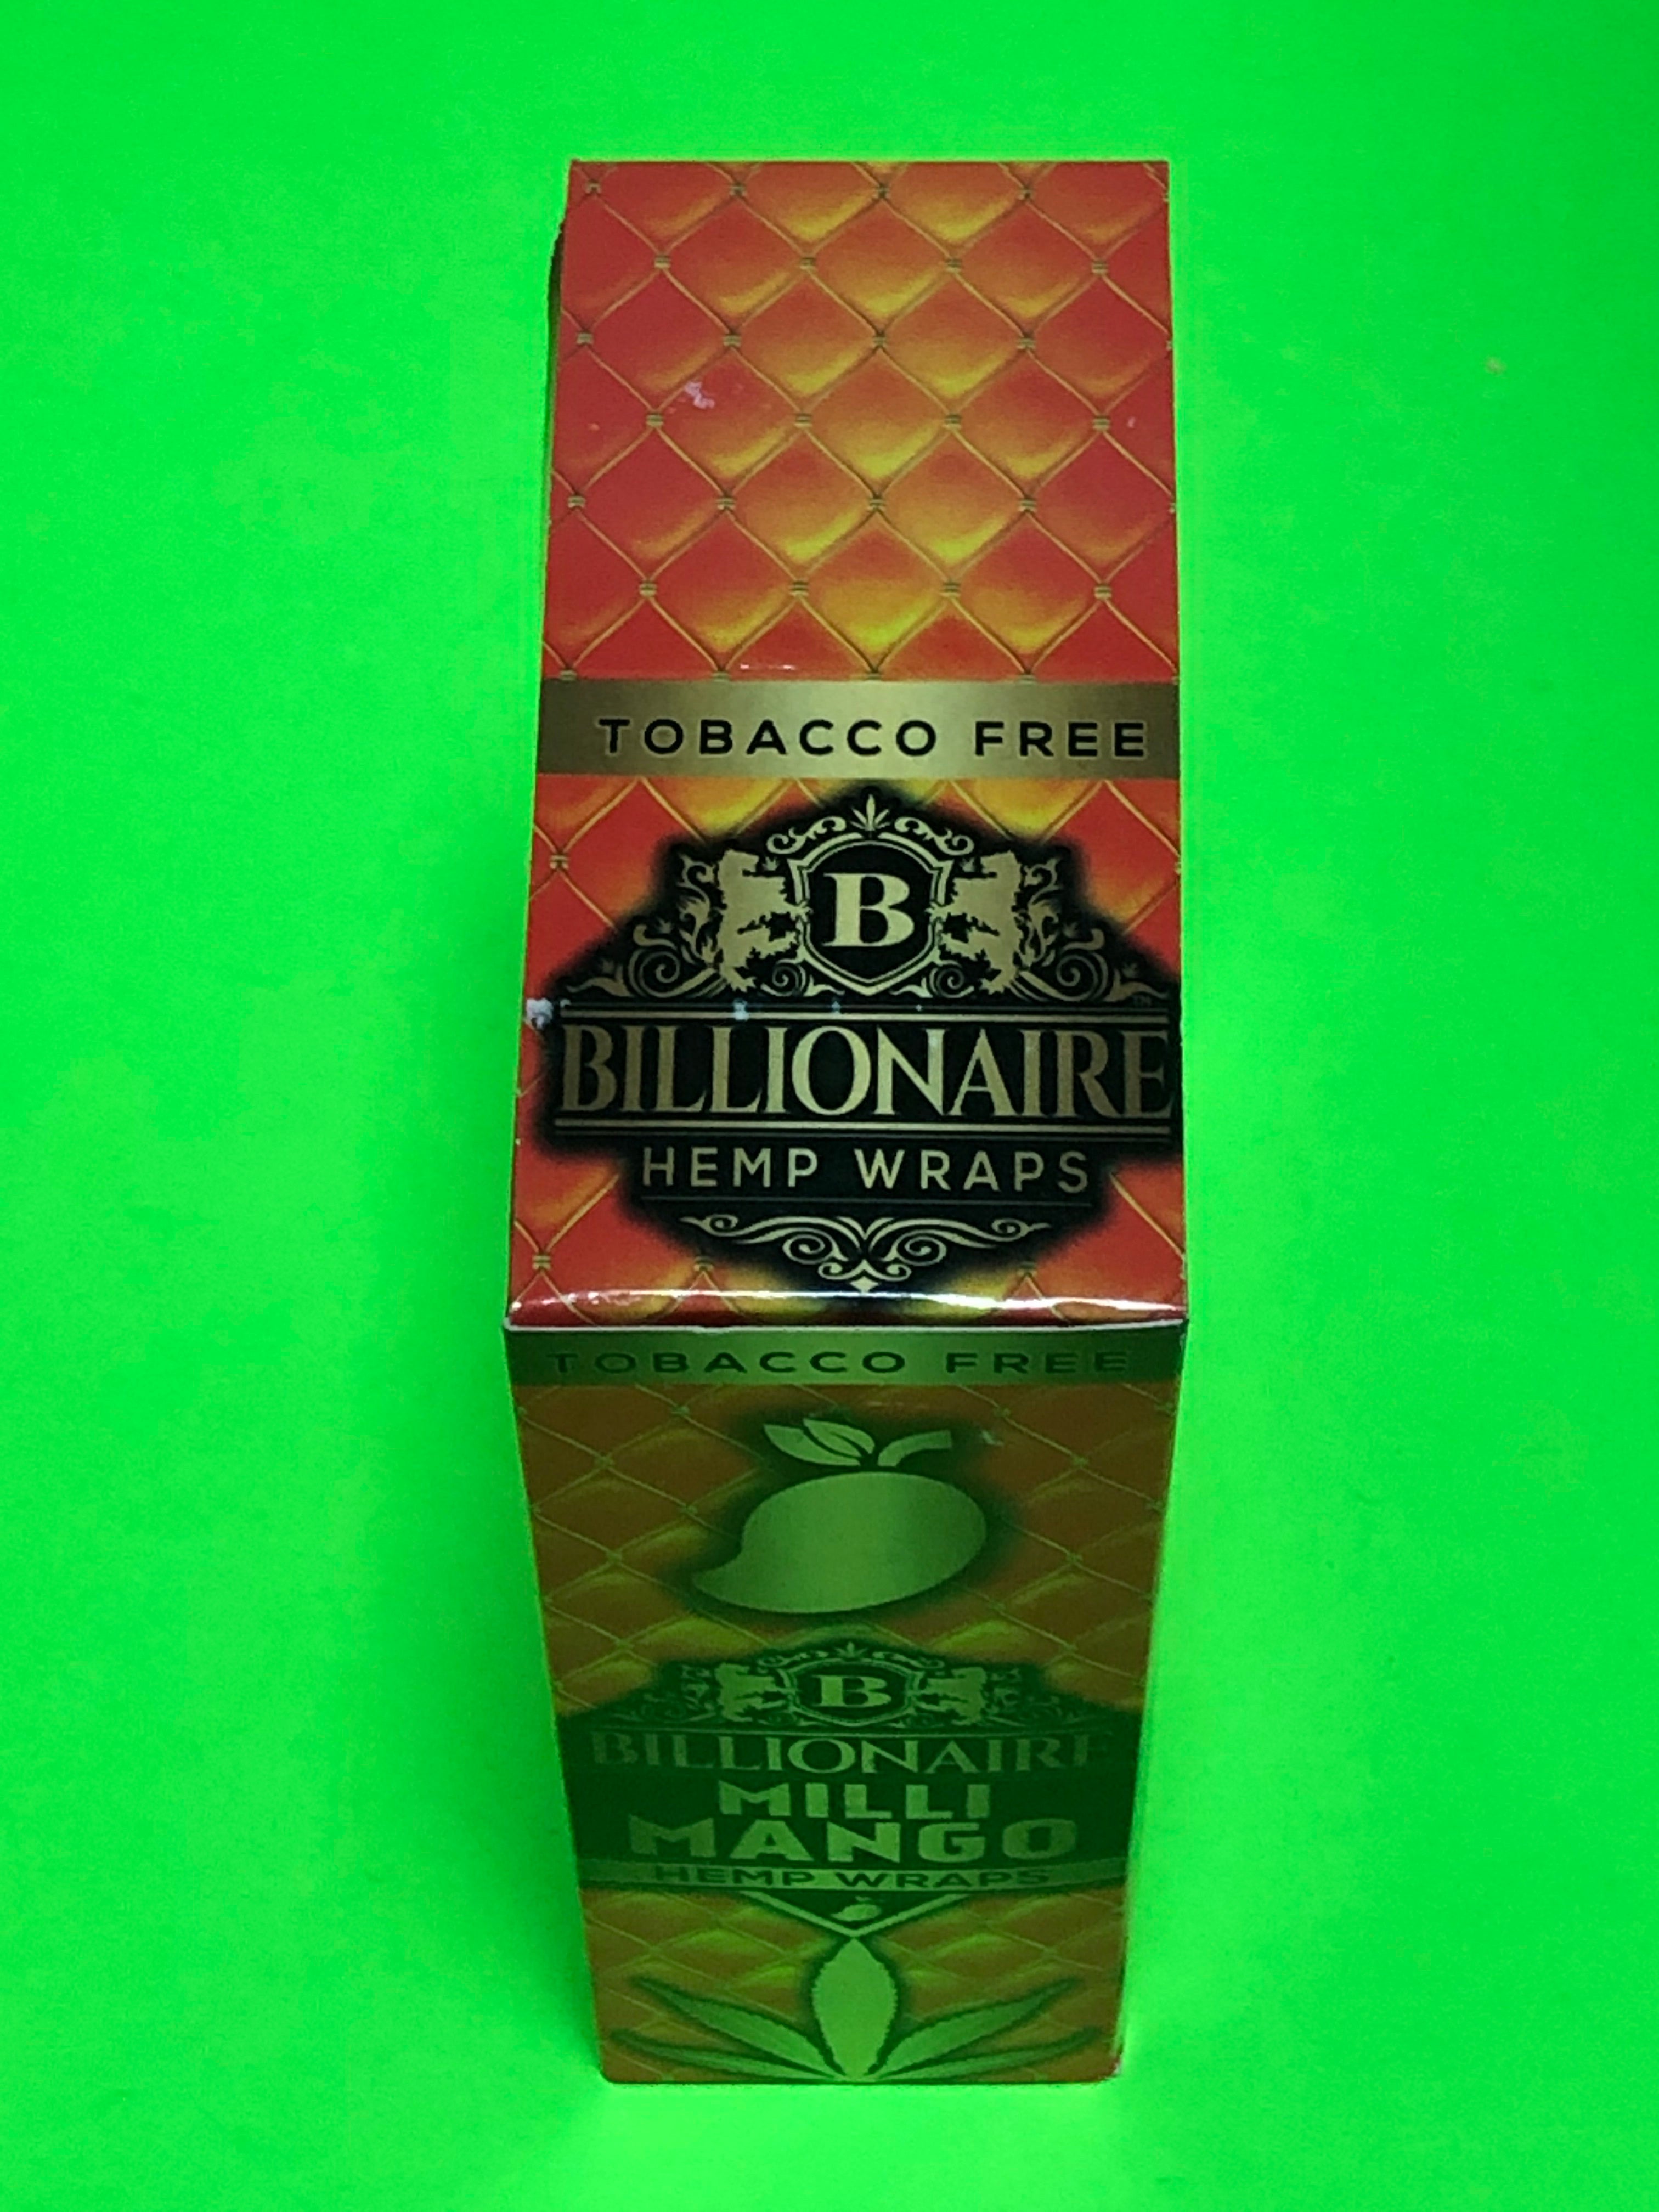 FREE GIFTS??IF U BUY Billionaire Milli Mango??50 High Quality Hemp Wraps 25 Packs